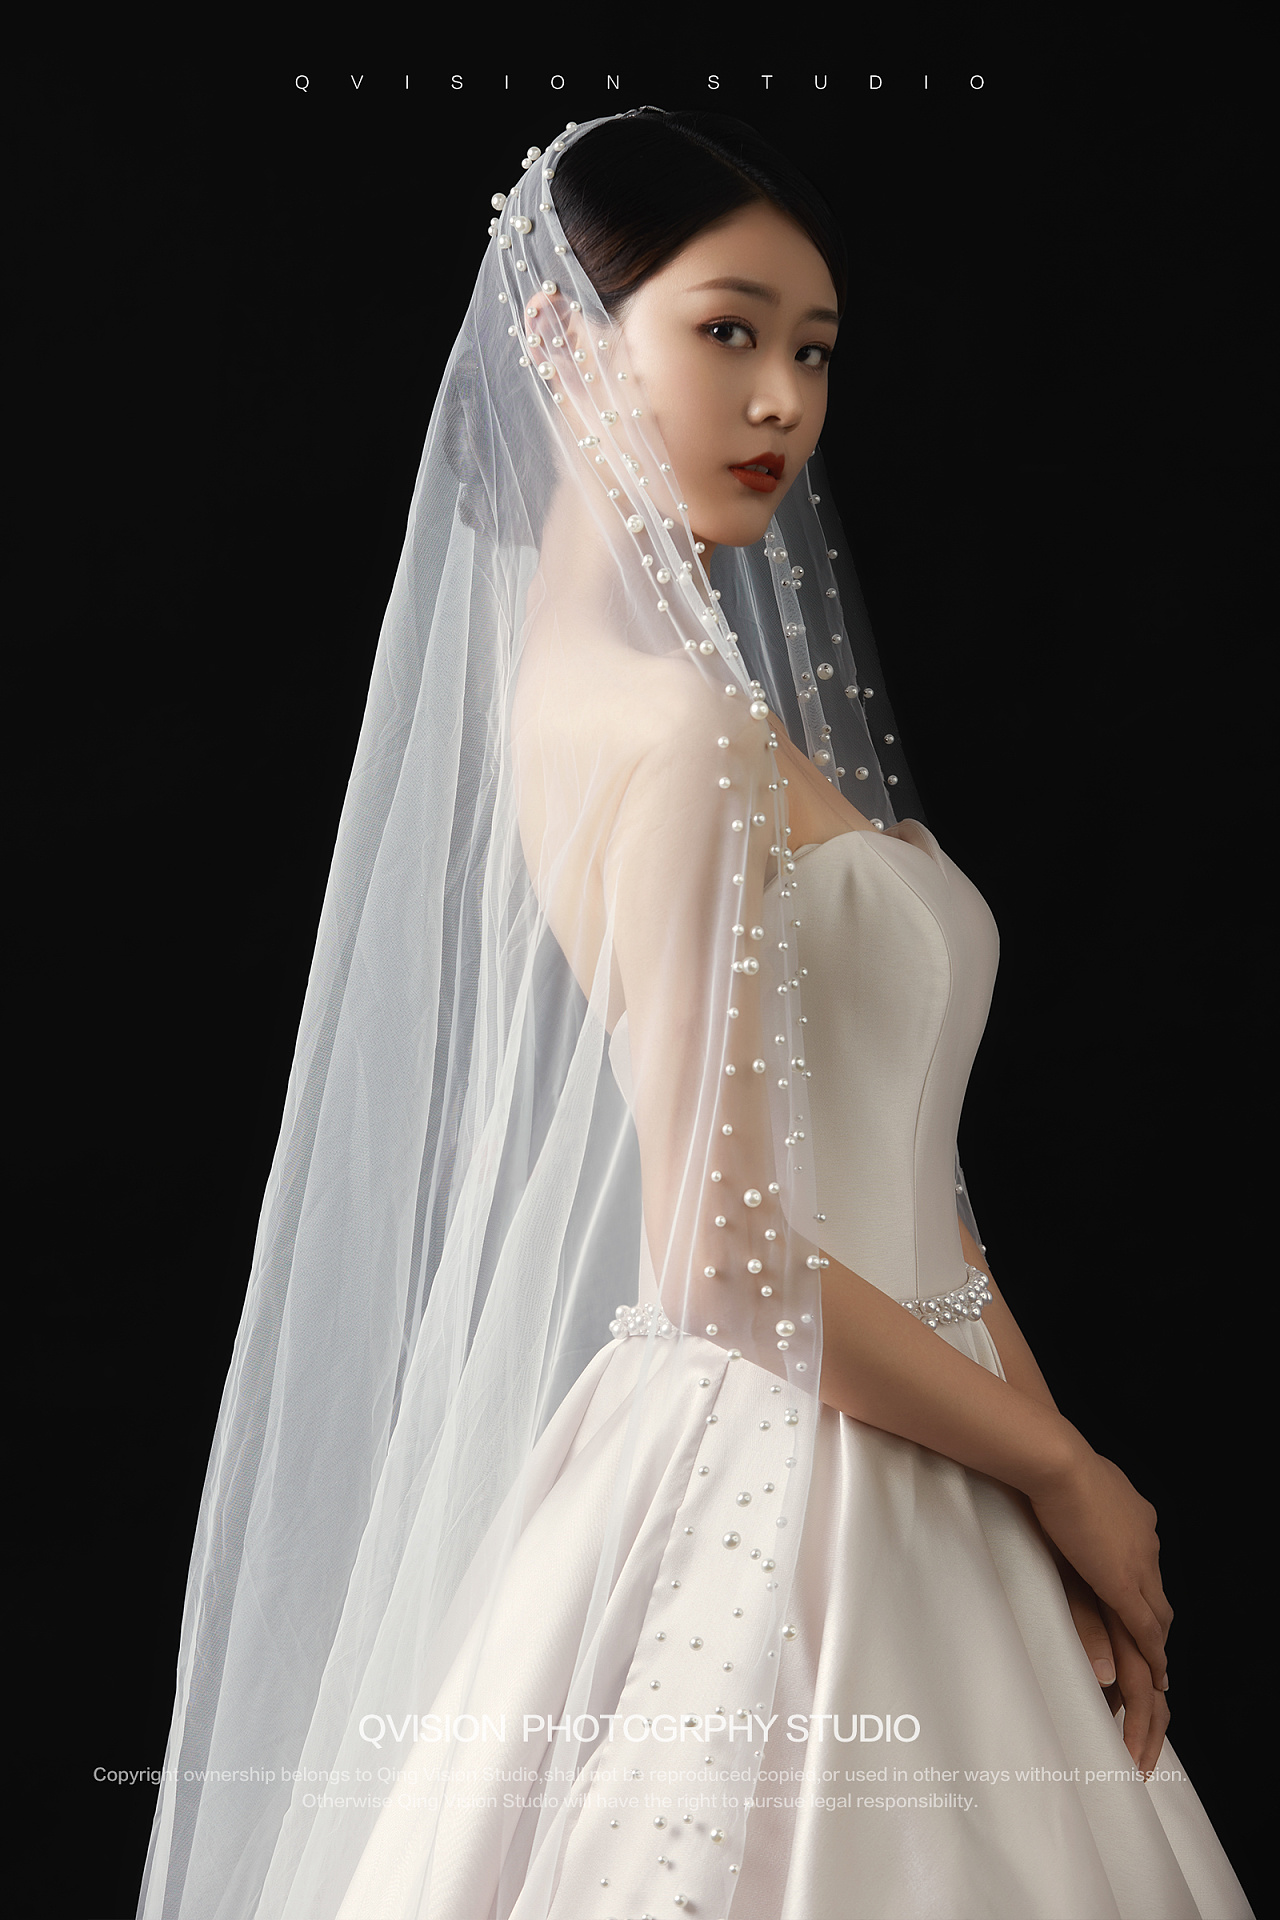 2020《MONET》系列 - 明星范 - 古摄影婚纱艺术-古摄影成都婚纱摄影艺术摄影网